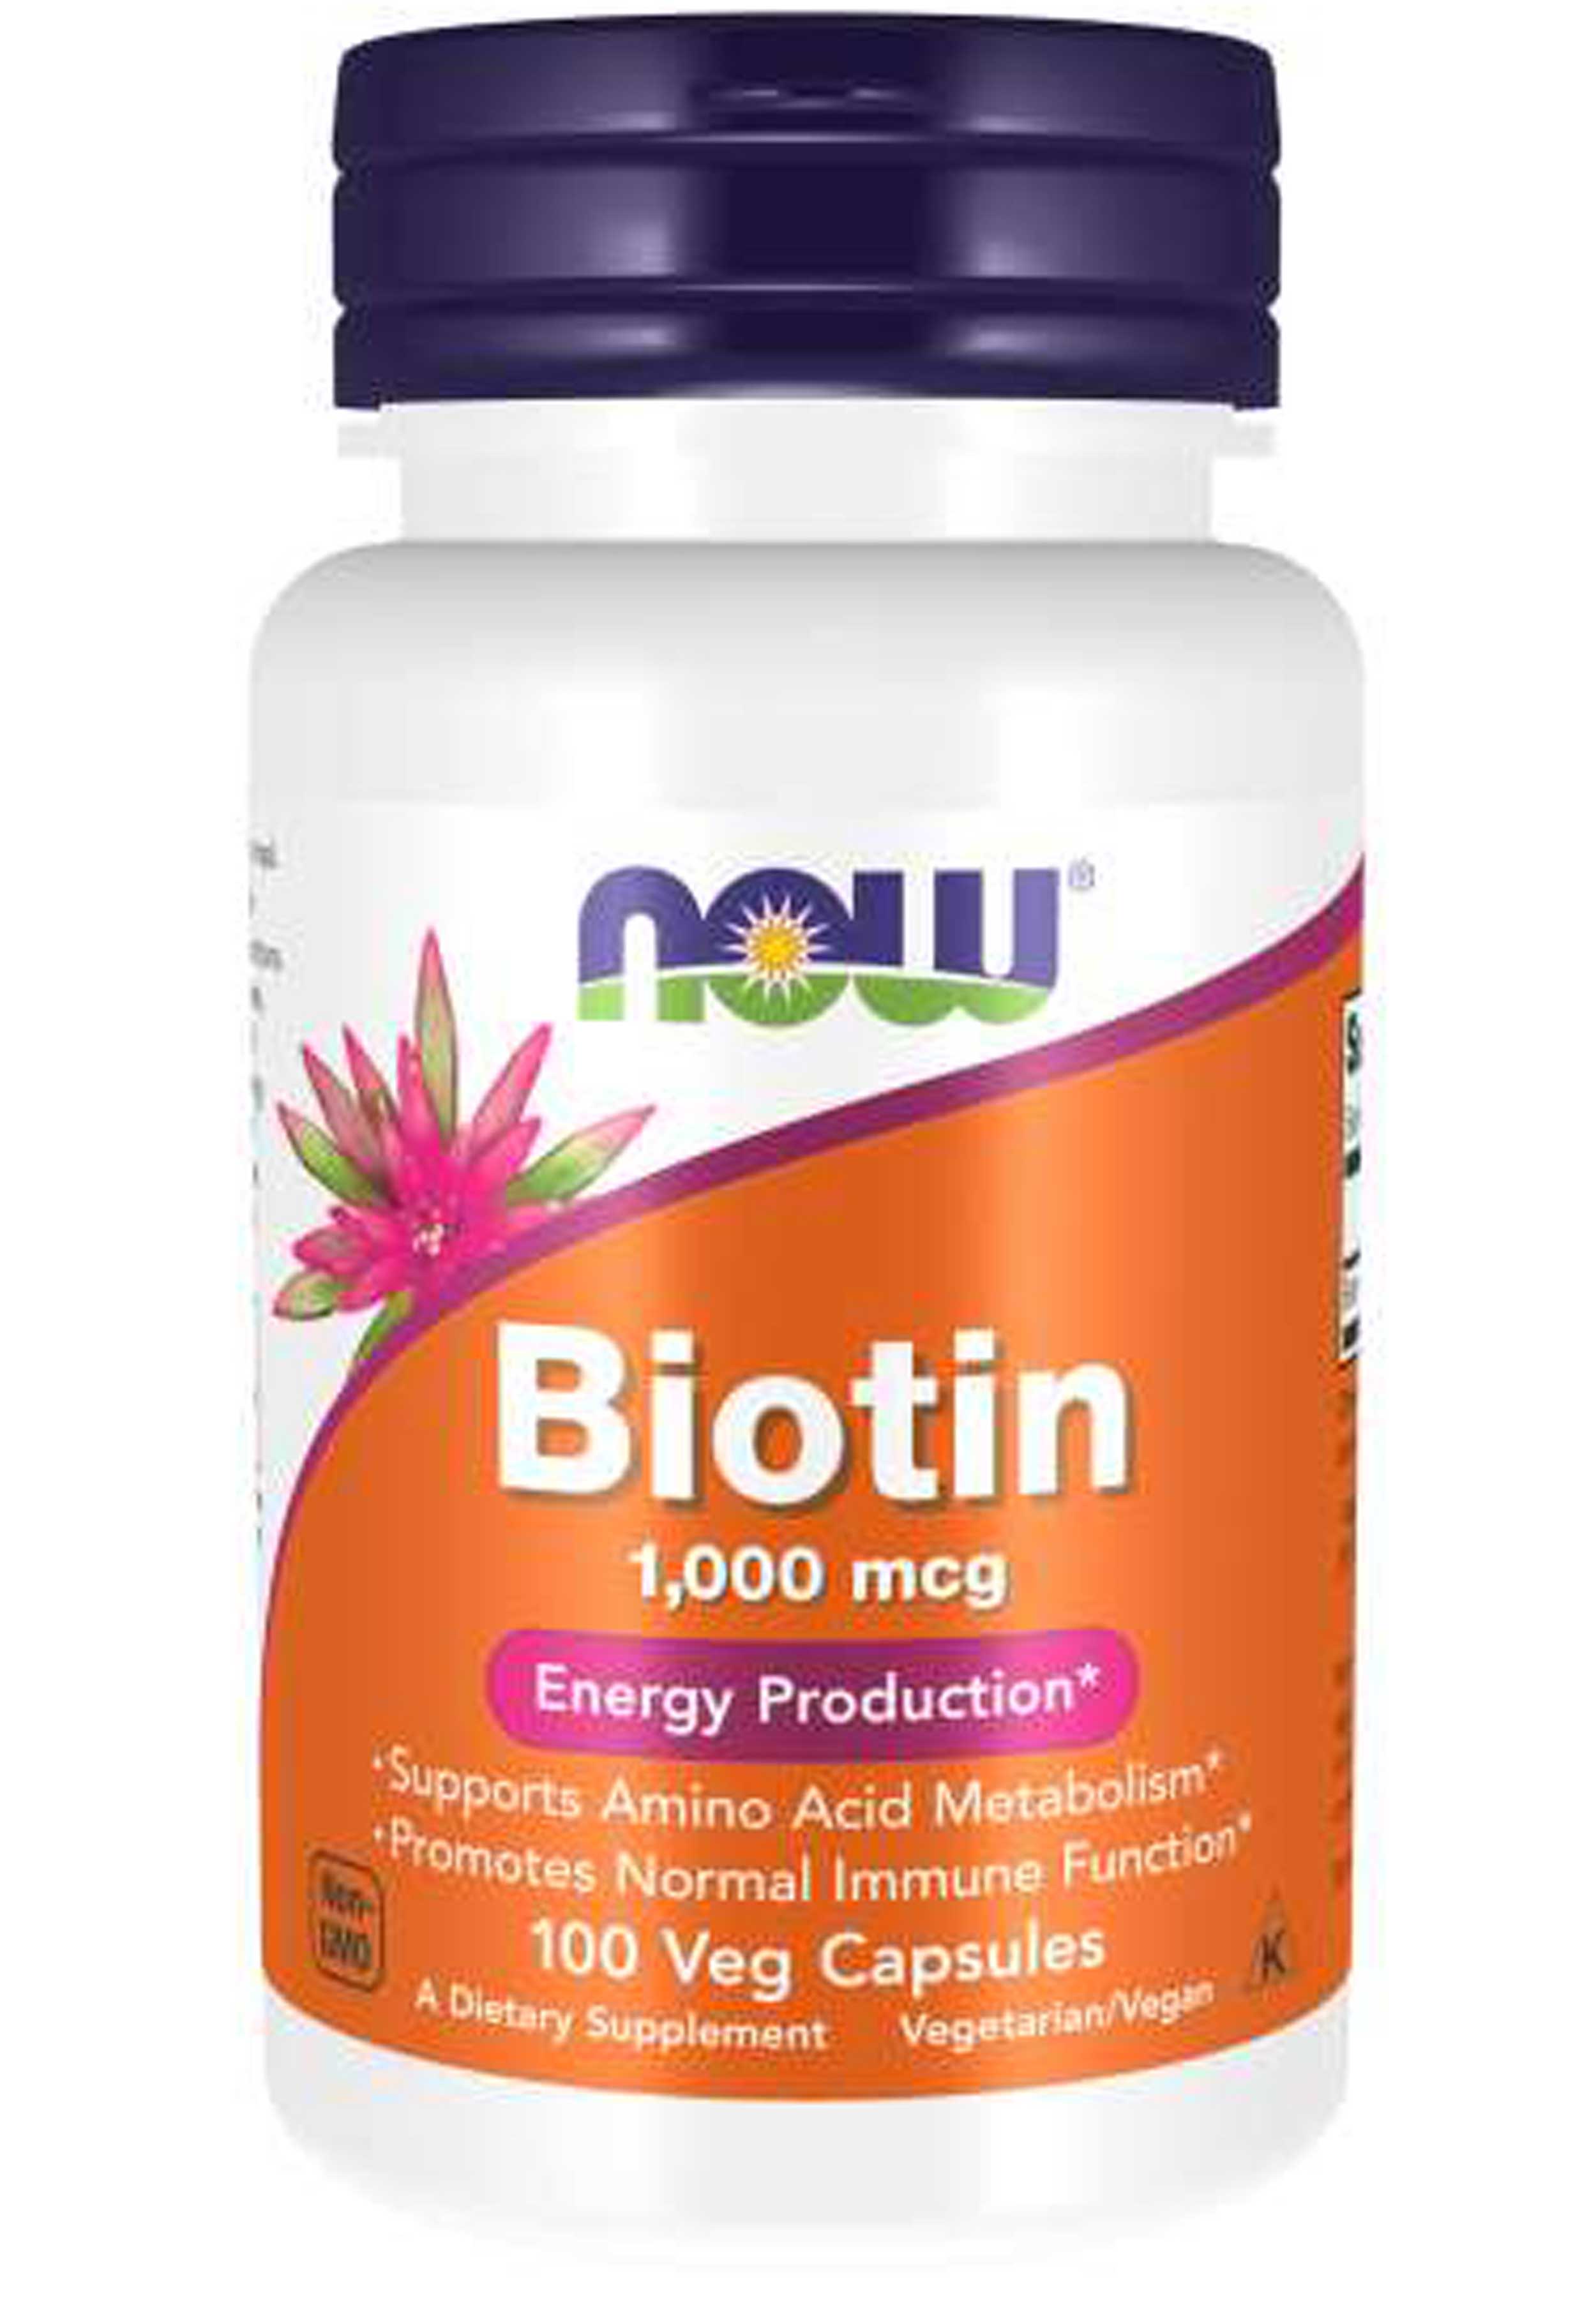 NOW Biotin 1,000 mcg